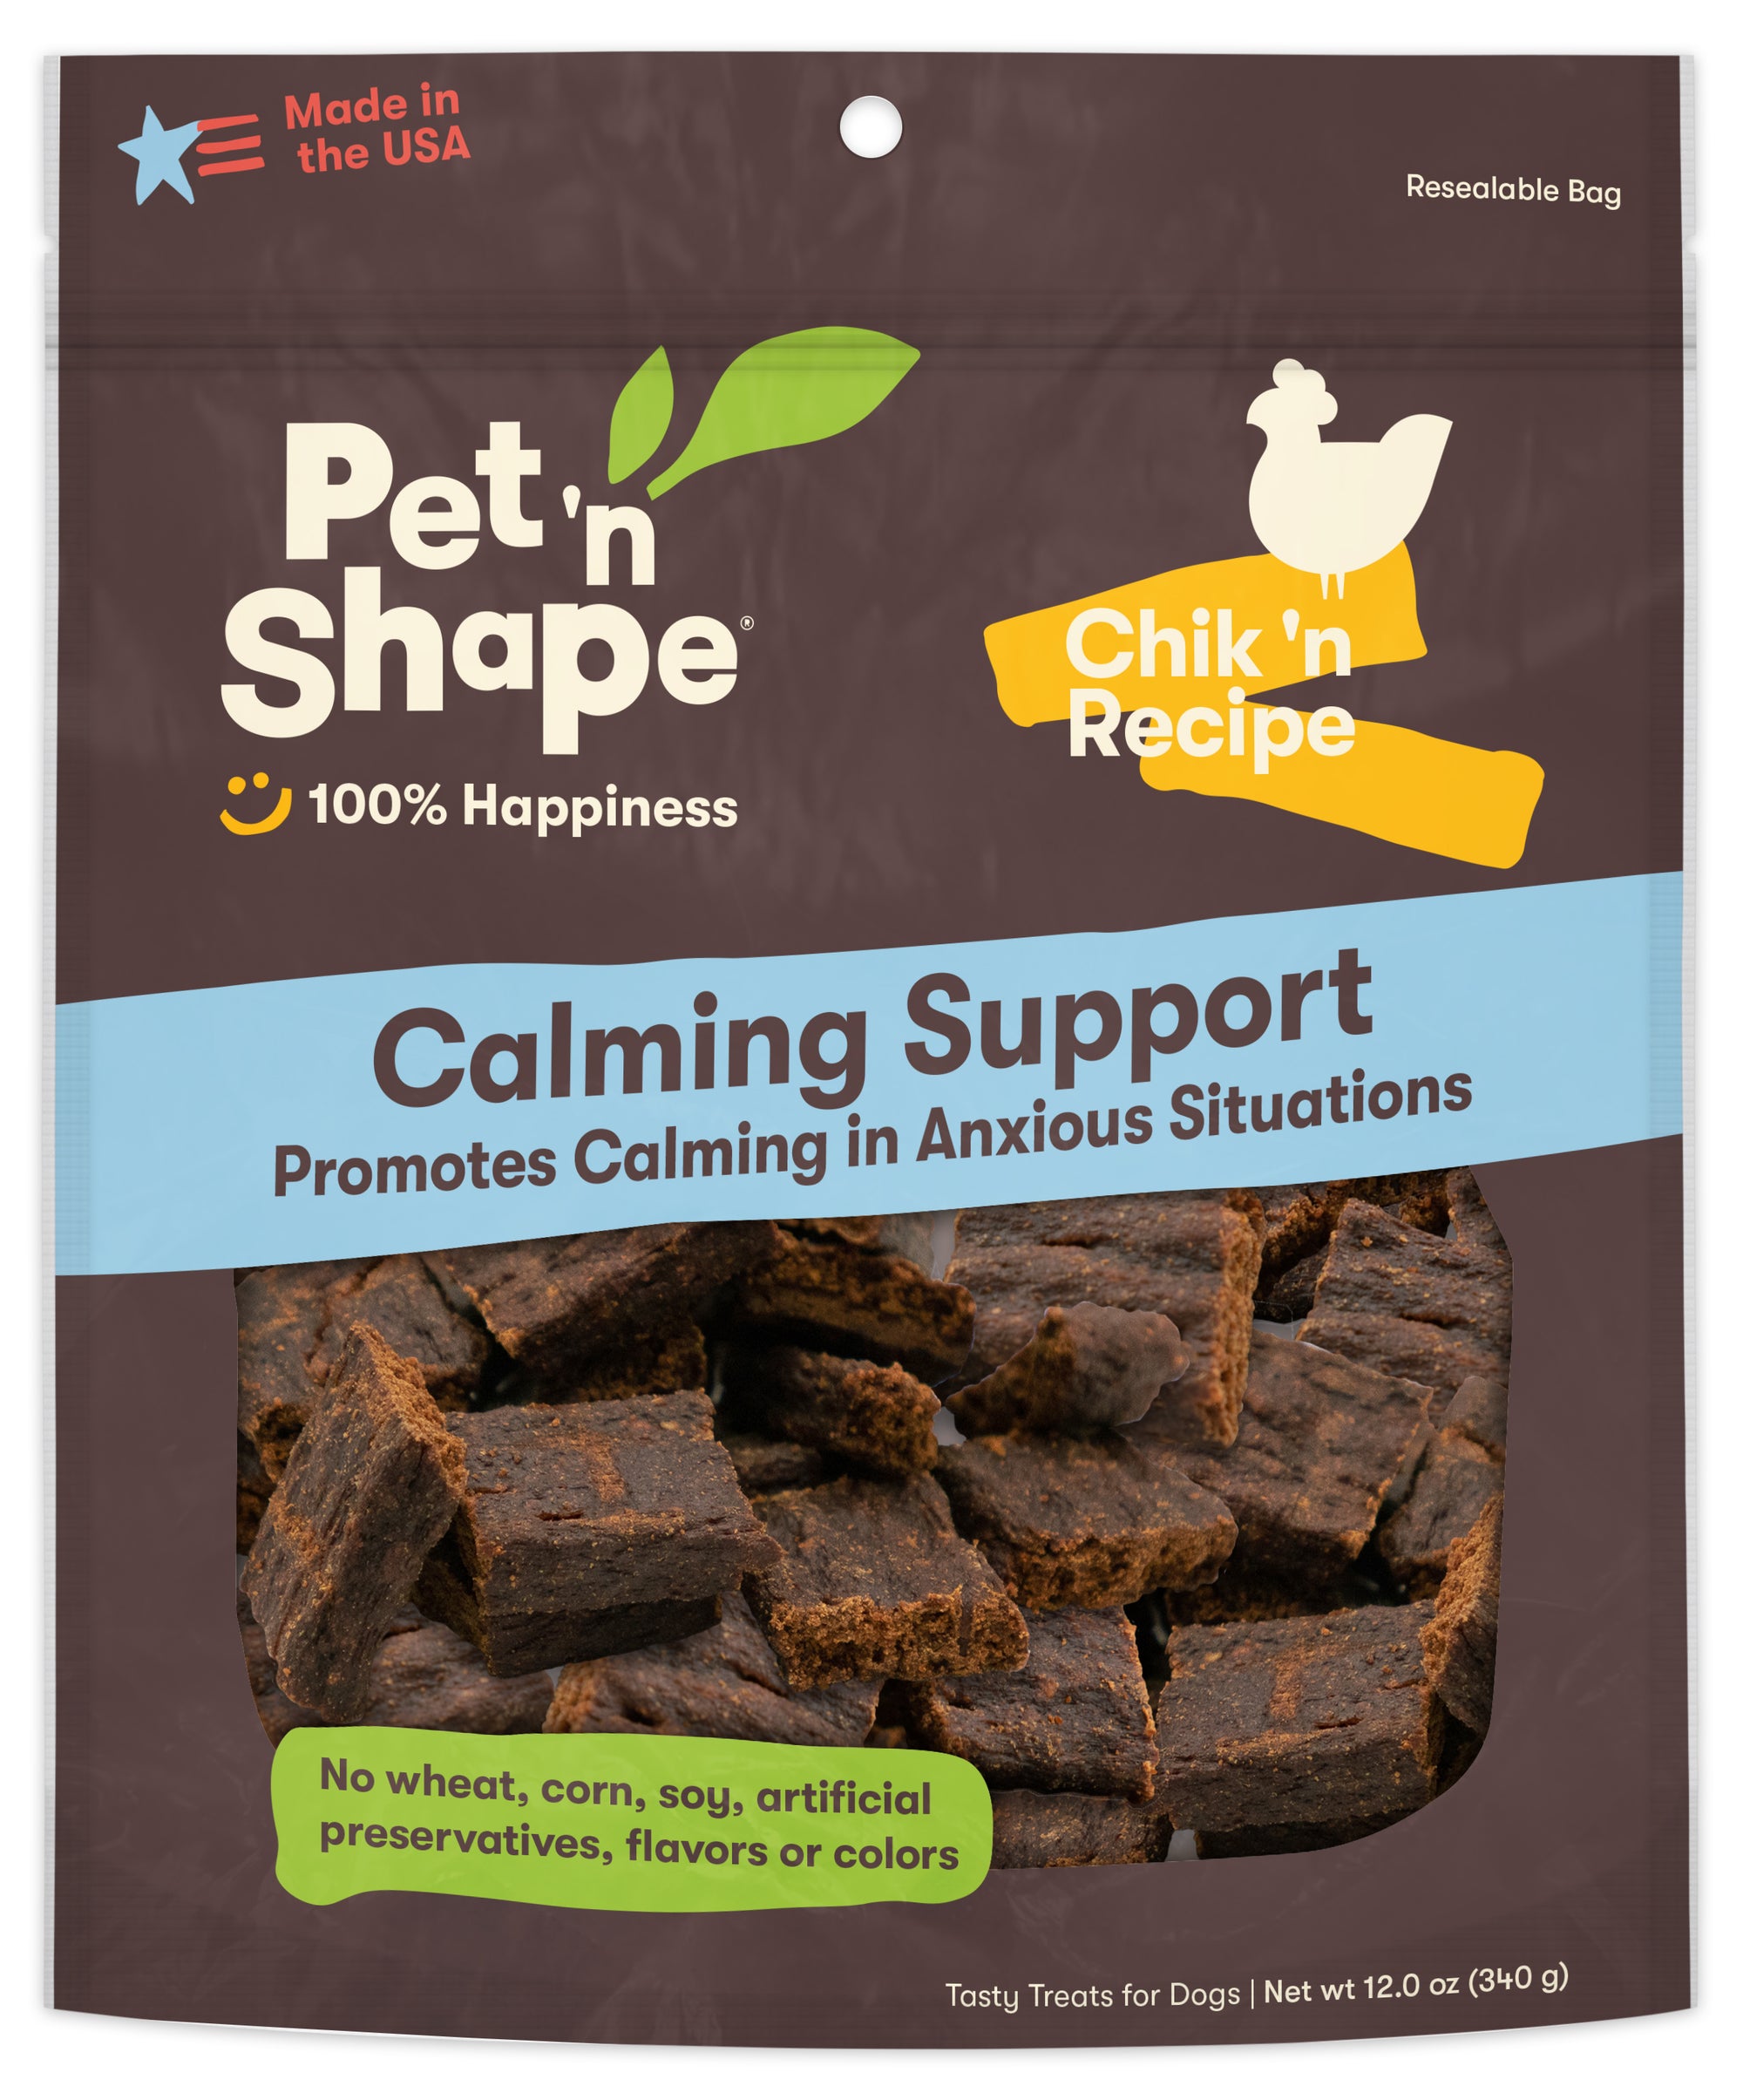 Calming Support Chik 'n Recipe – Pet 'n Shape